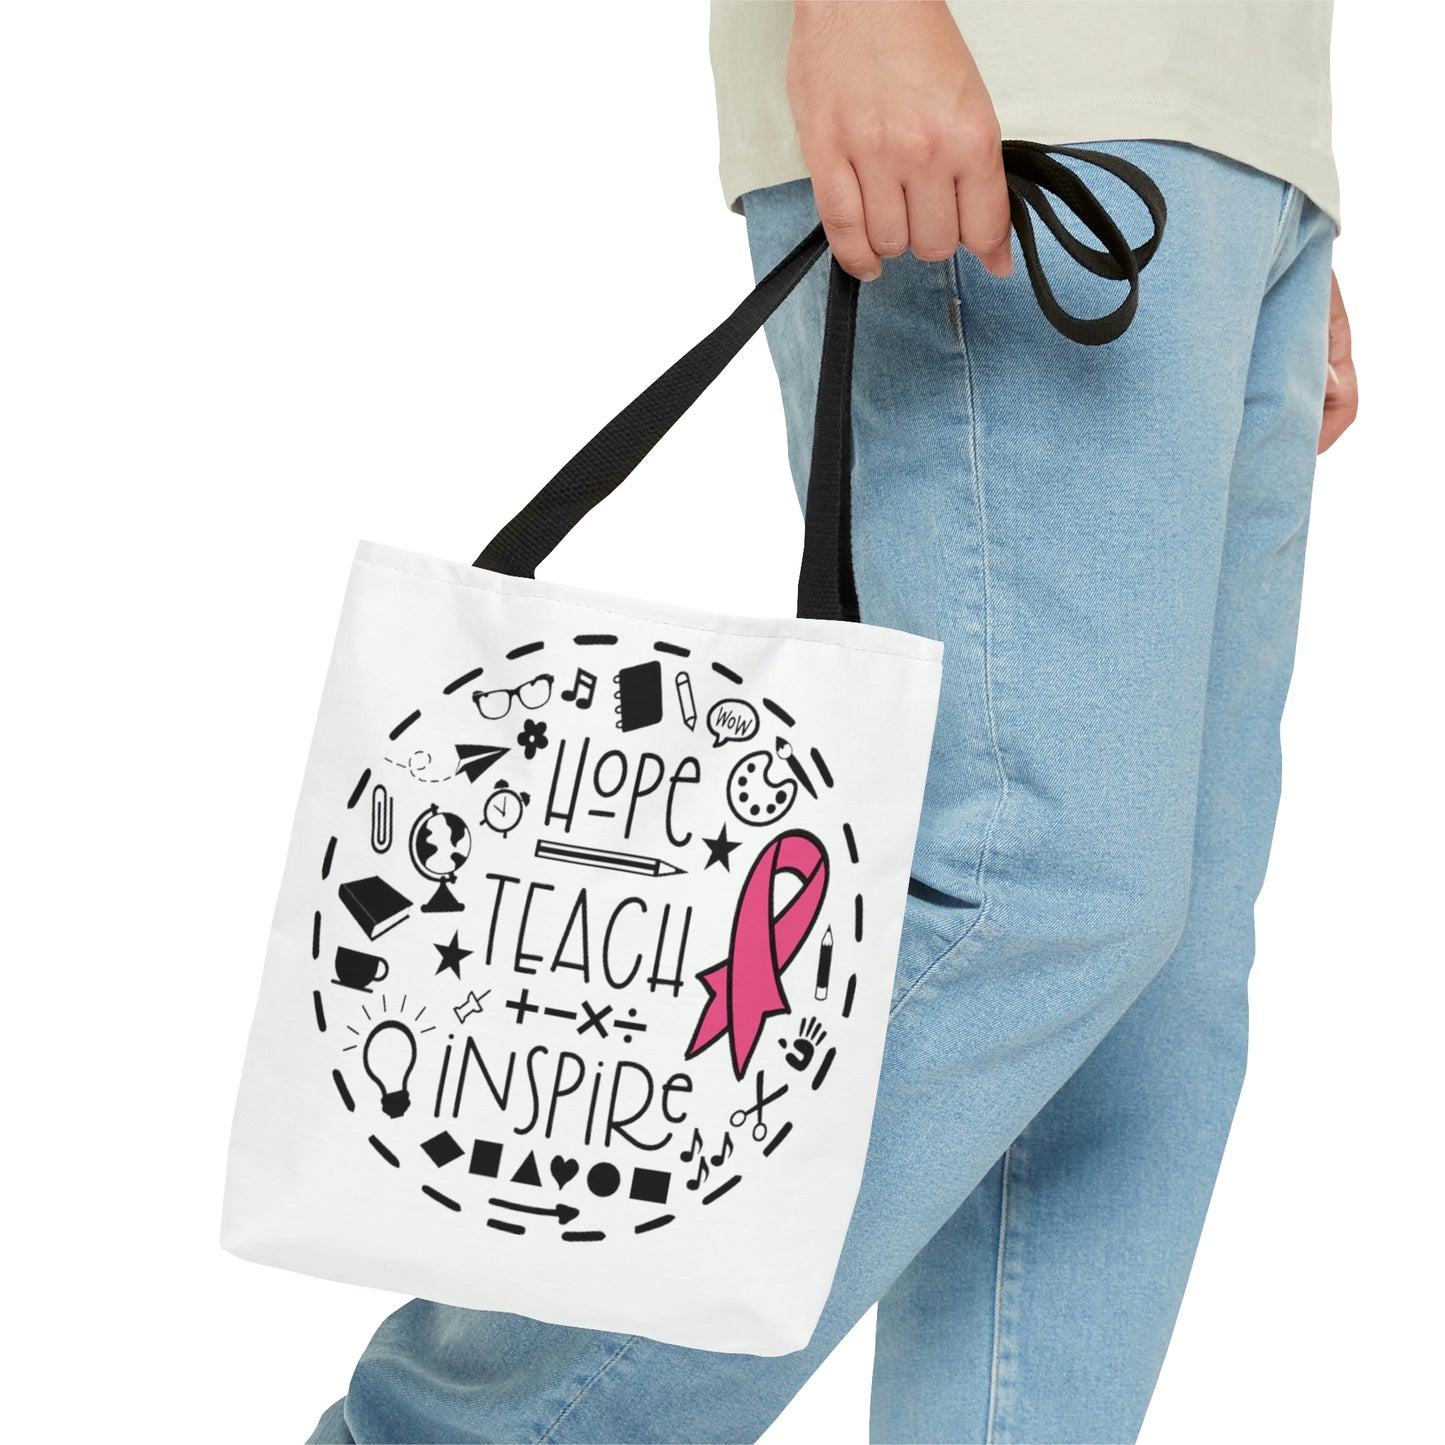 "Hope, Teach, & Inspire" Breast Cancer Tote Bag